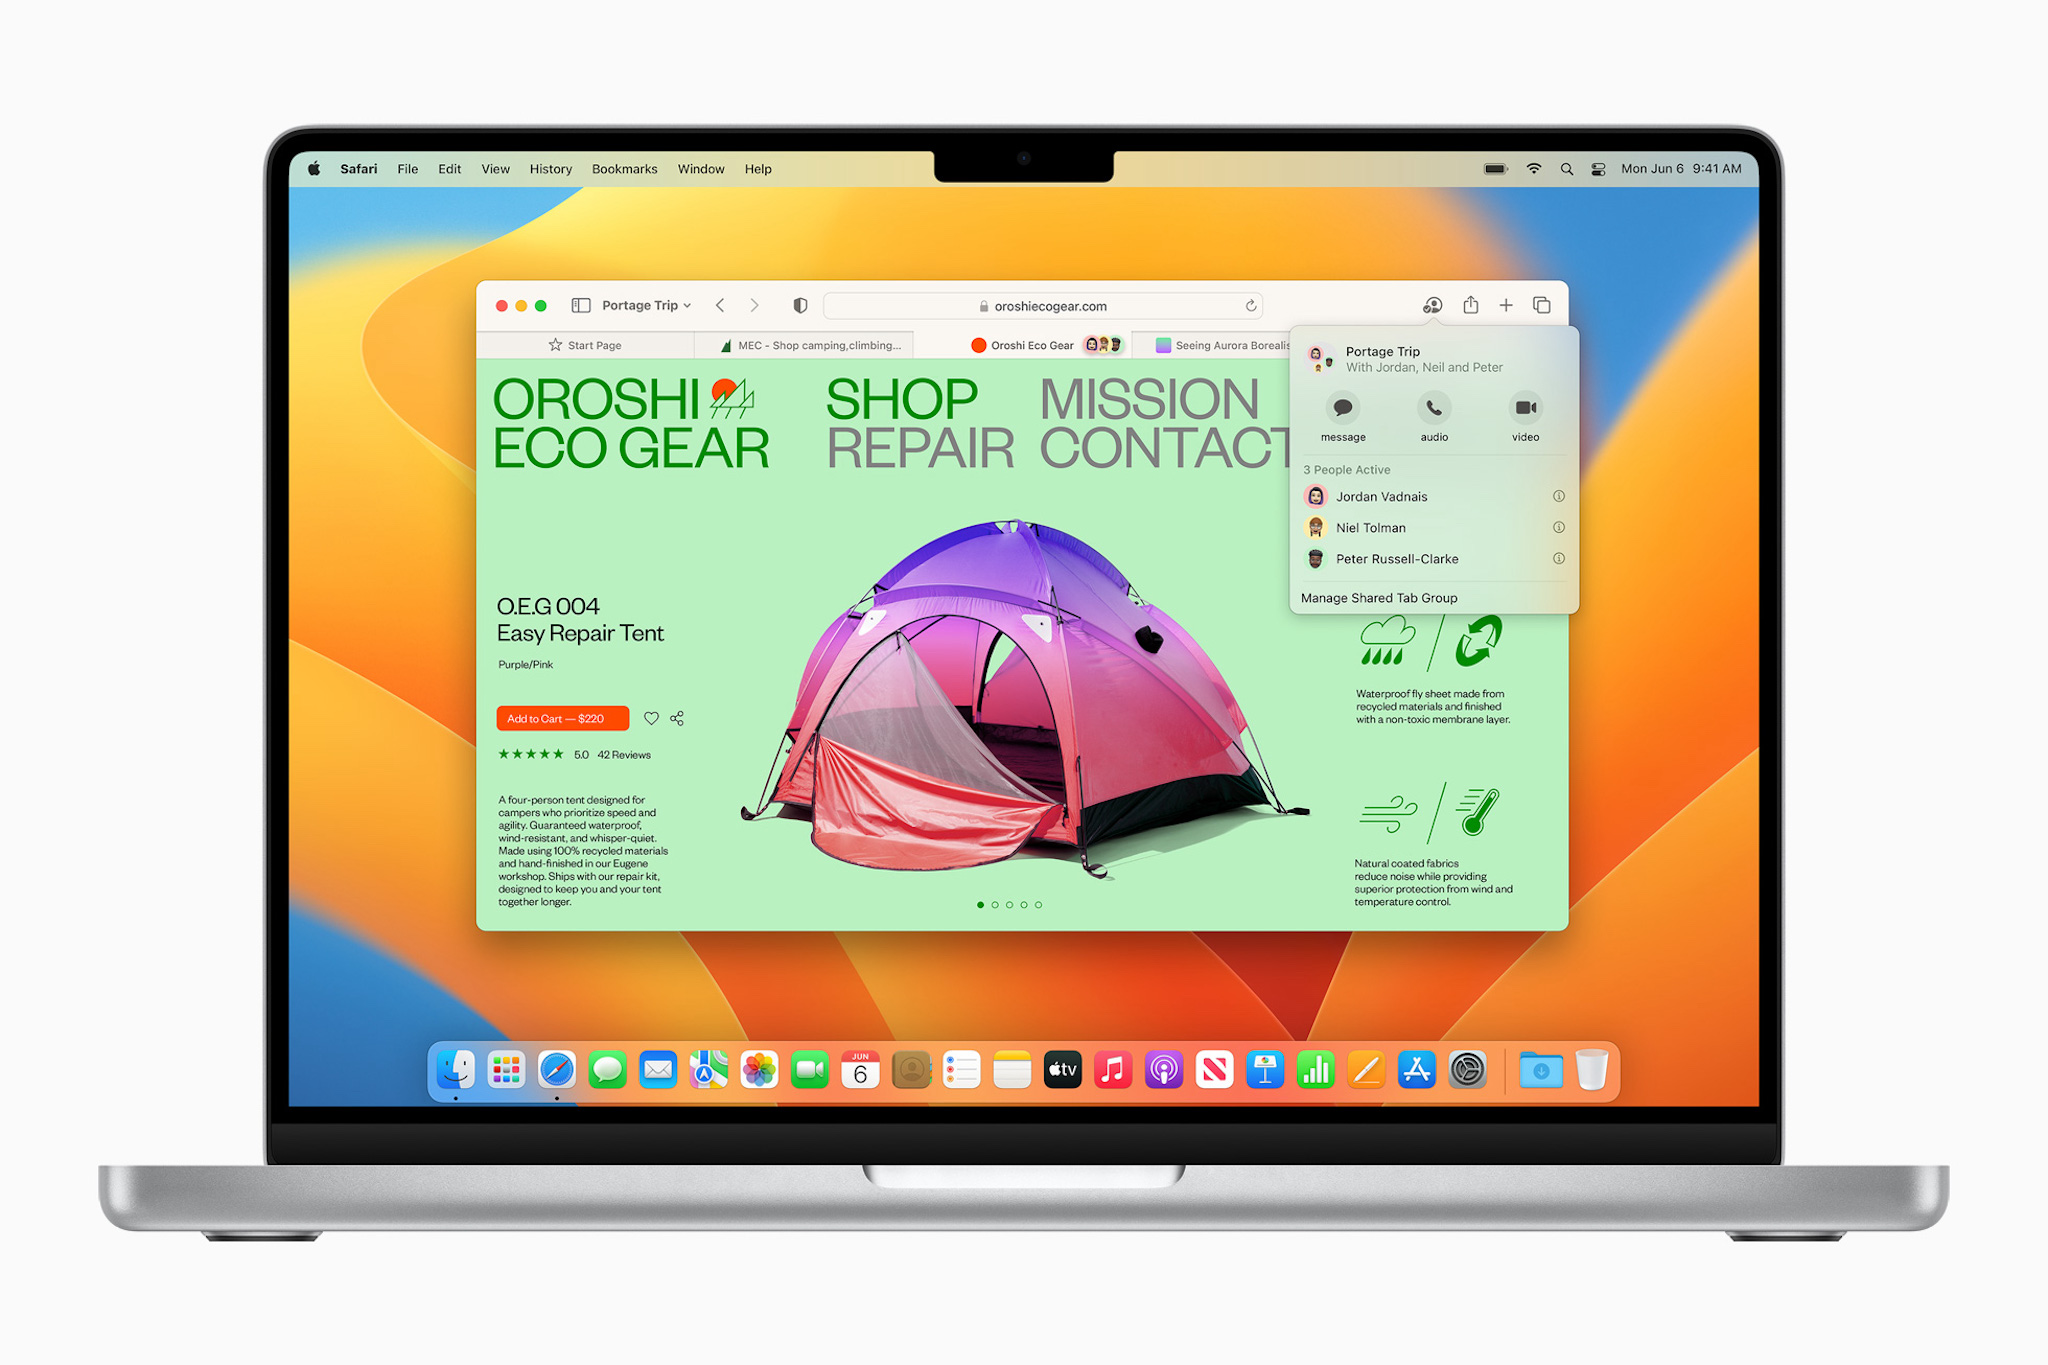 Apple-WWDC22-macOS-Ventura-Safari-shared-Tab-Groups-220606.jpg